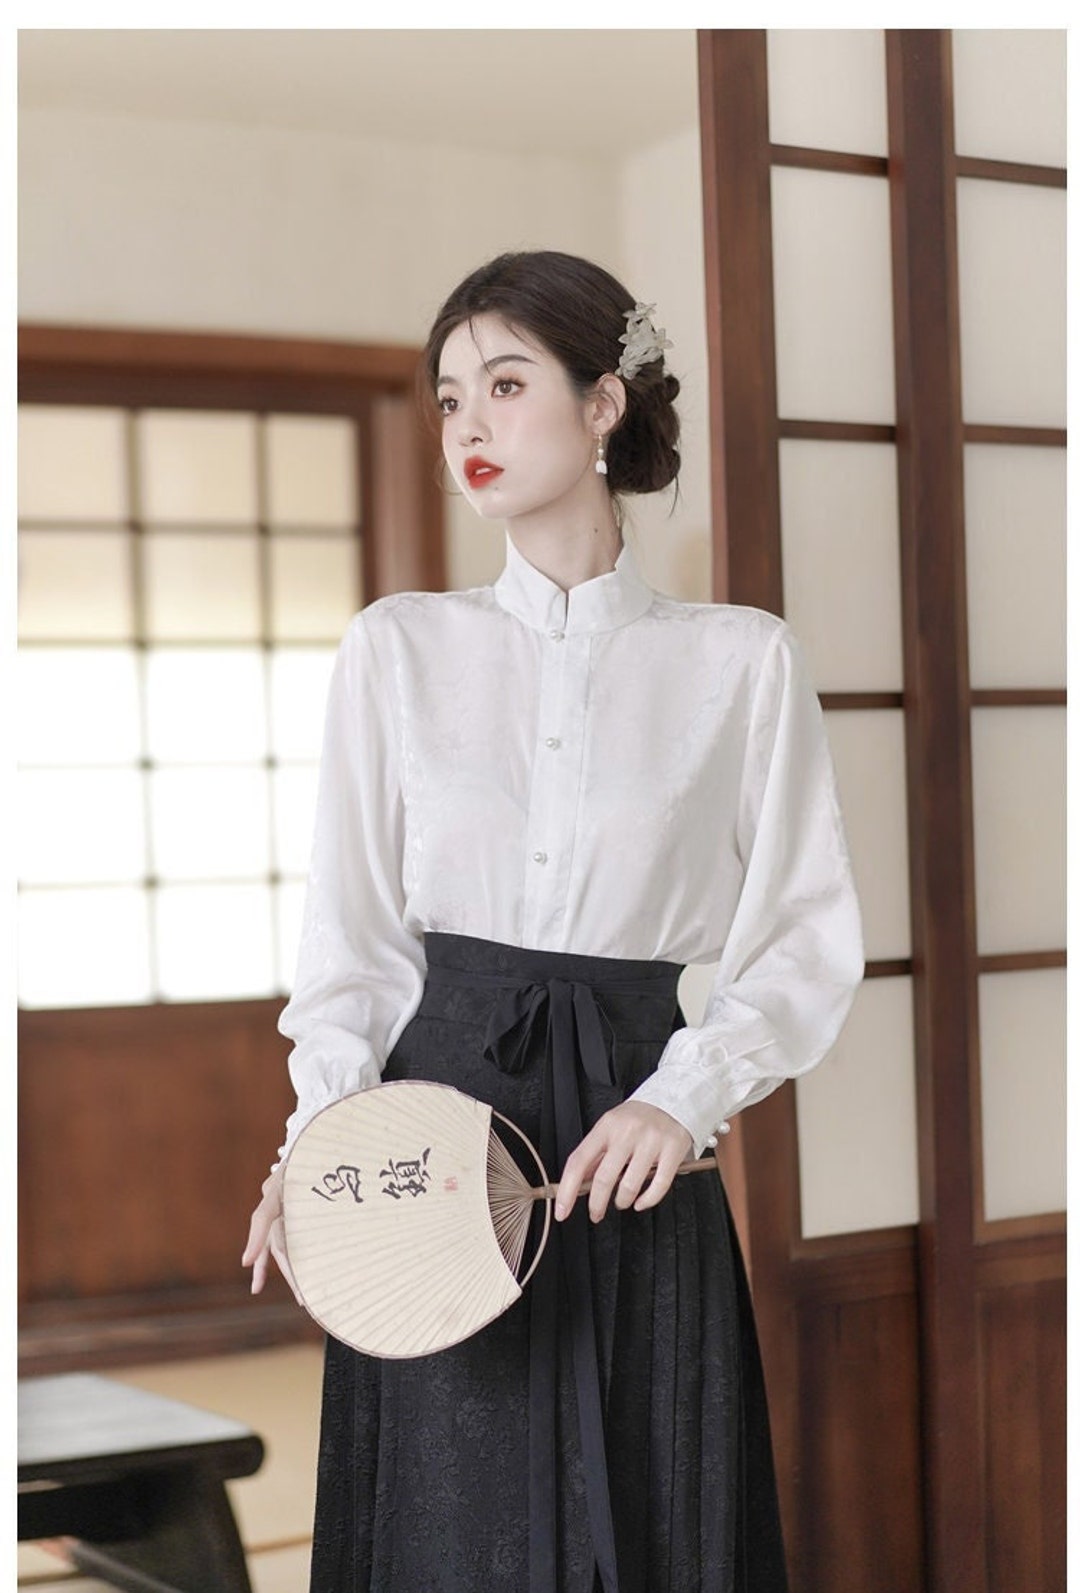 Black Hanfu Hanfu Dress Women Hanfu Skirt With White Tops - Etsy